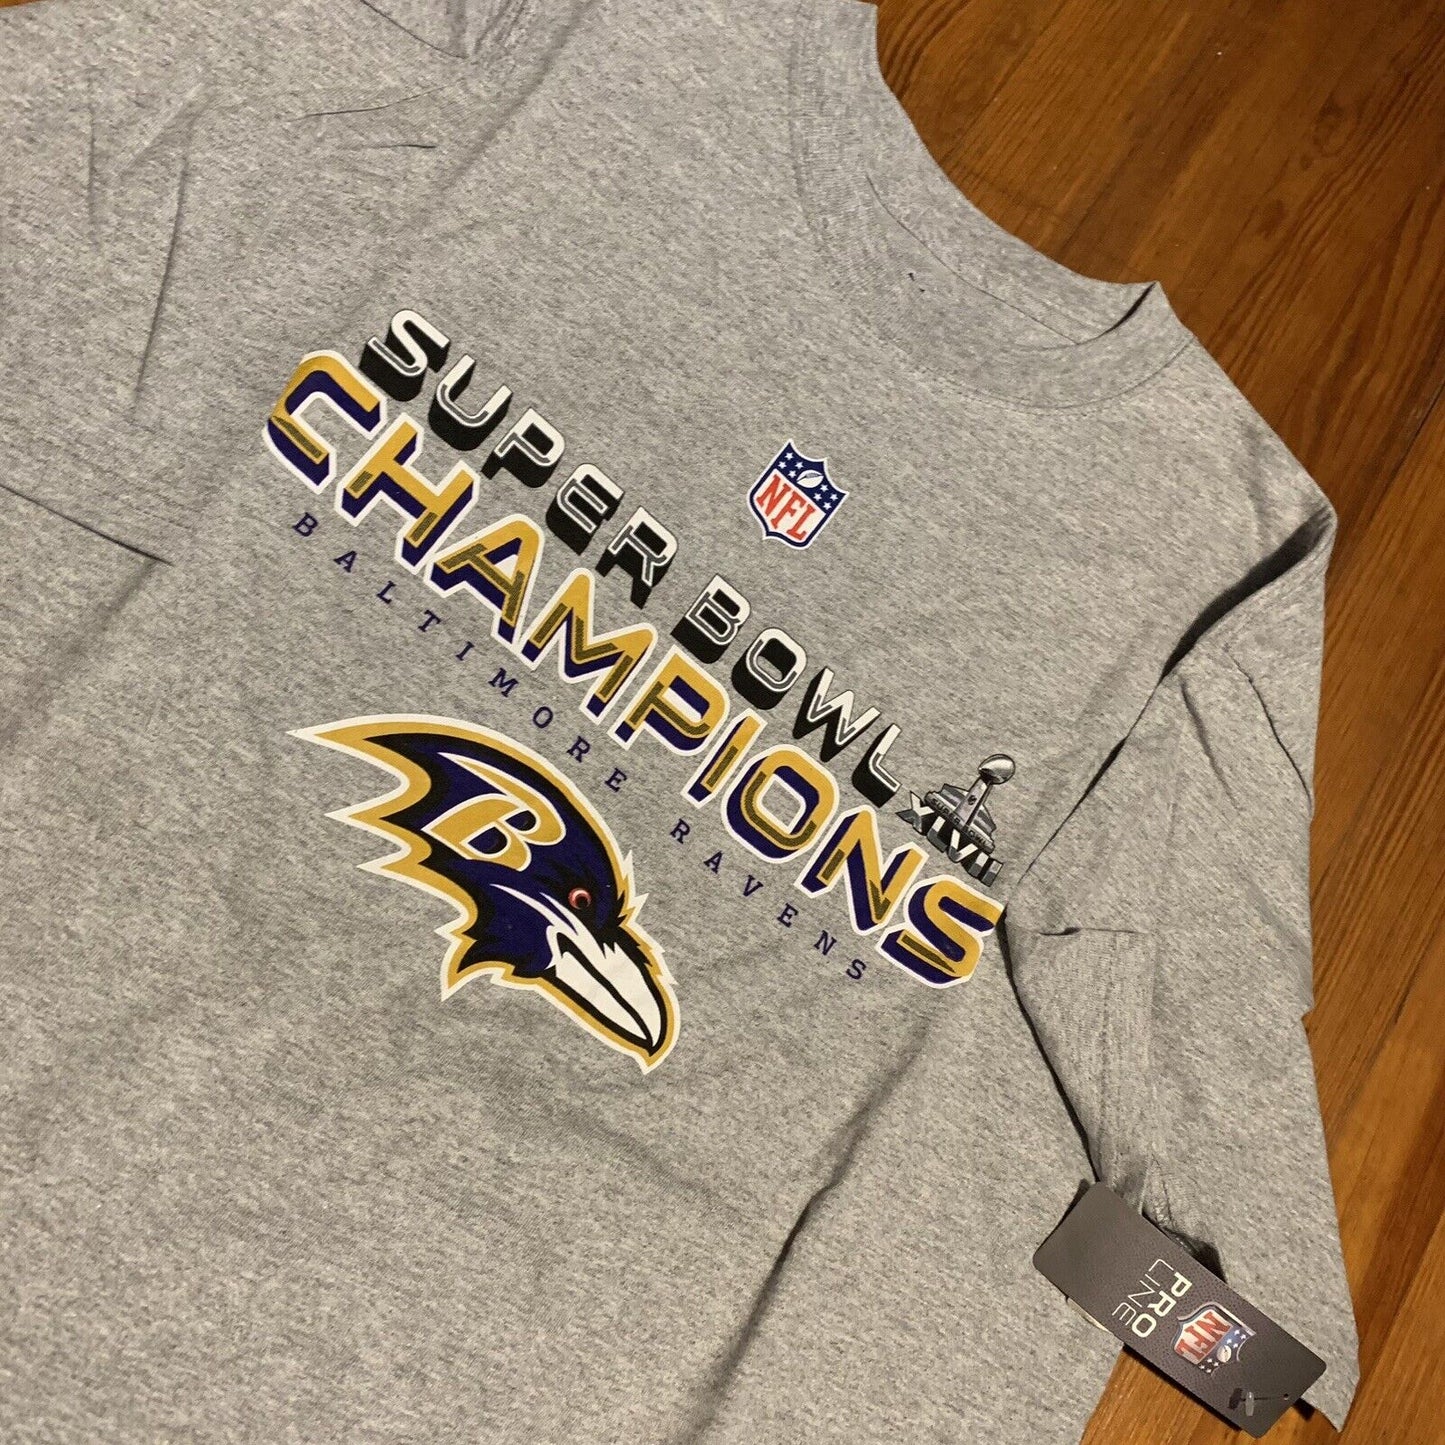 2012 NFL Baltimore Ravens Super Bowl Champs T-shirt Size XL